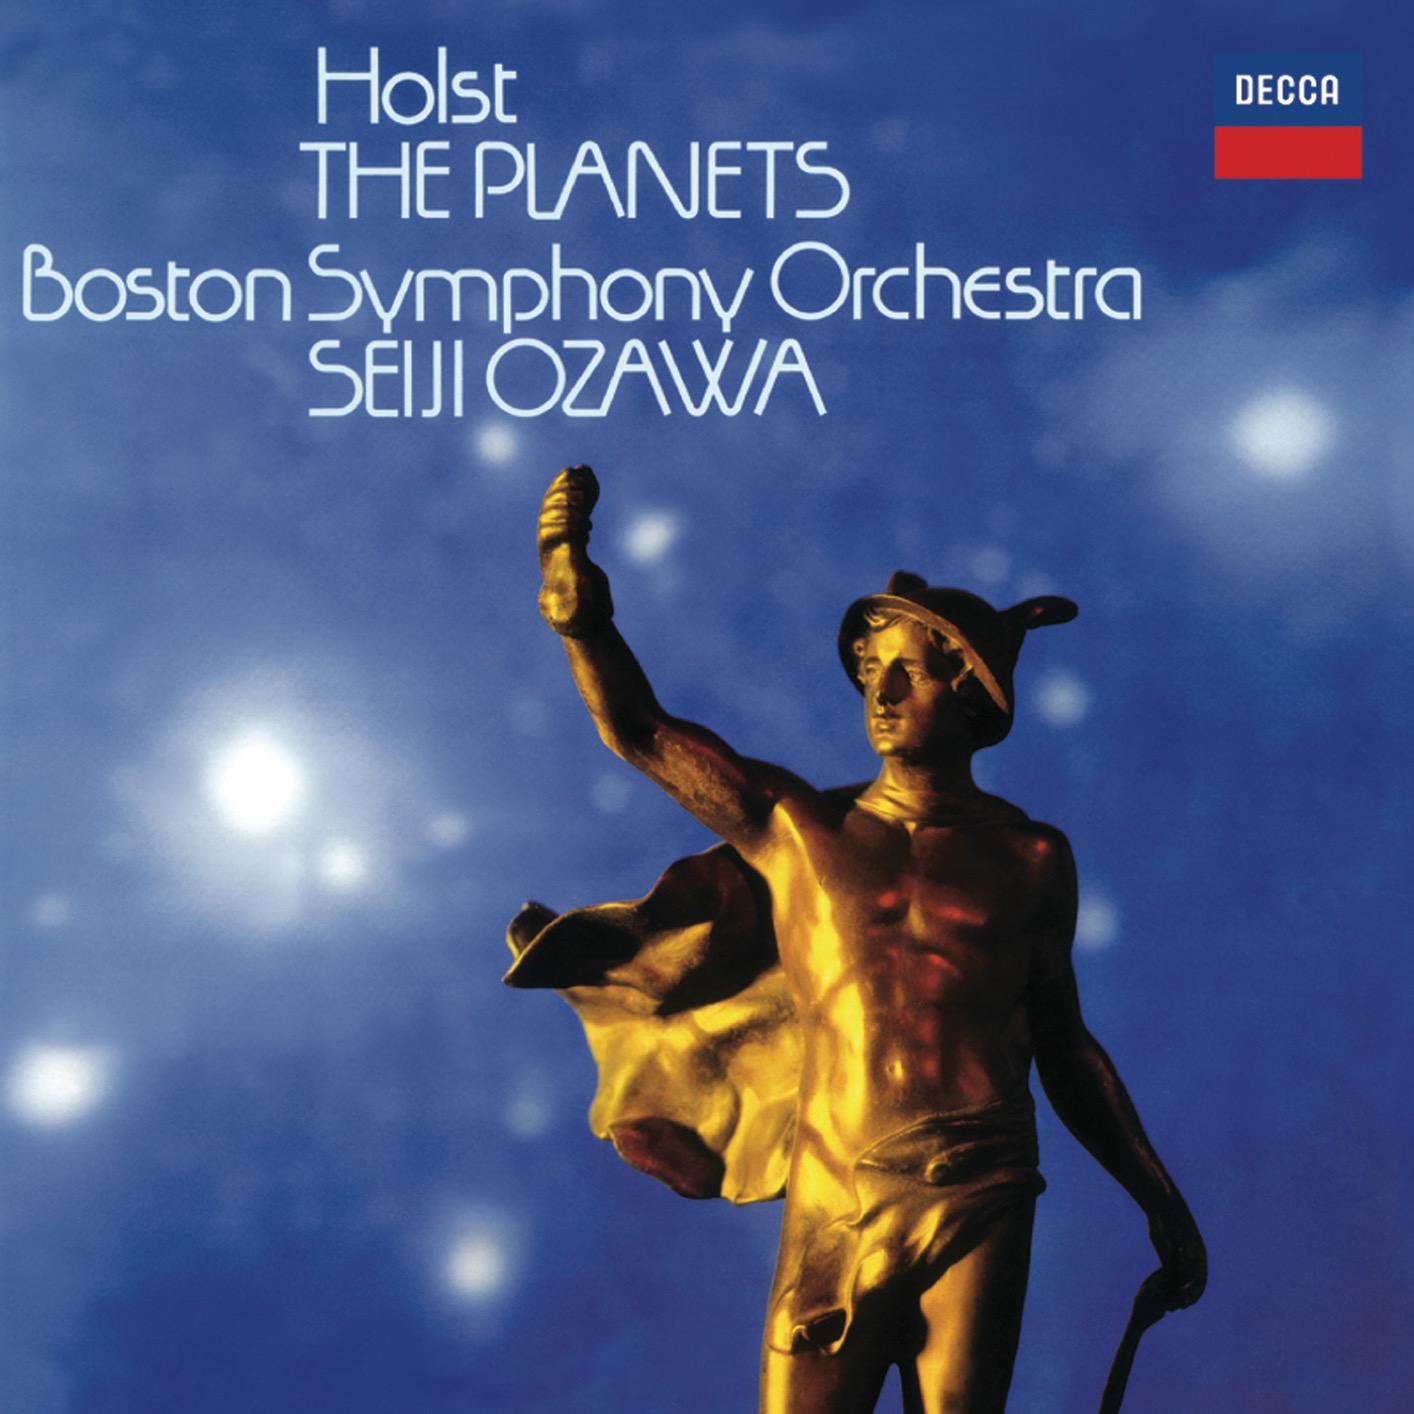 "Holst The Album of Boston Symphony Orchestra & Seiji Ozawa